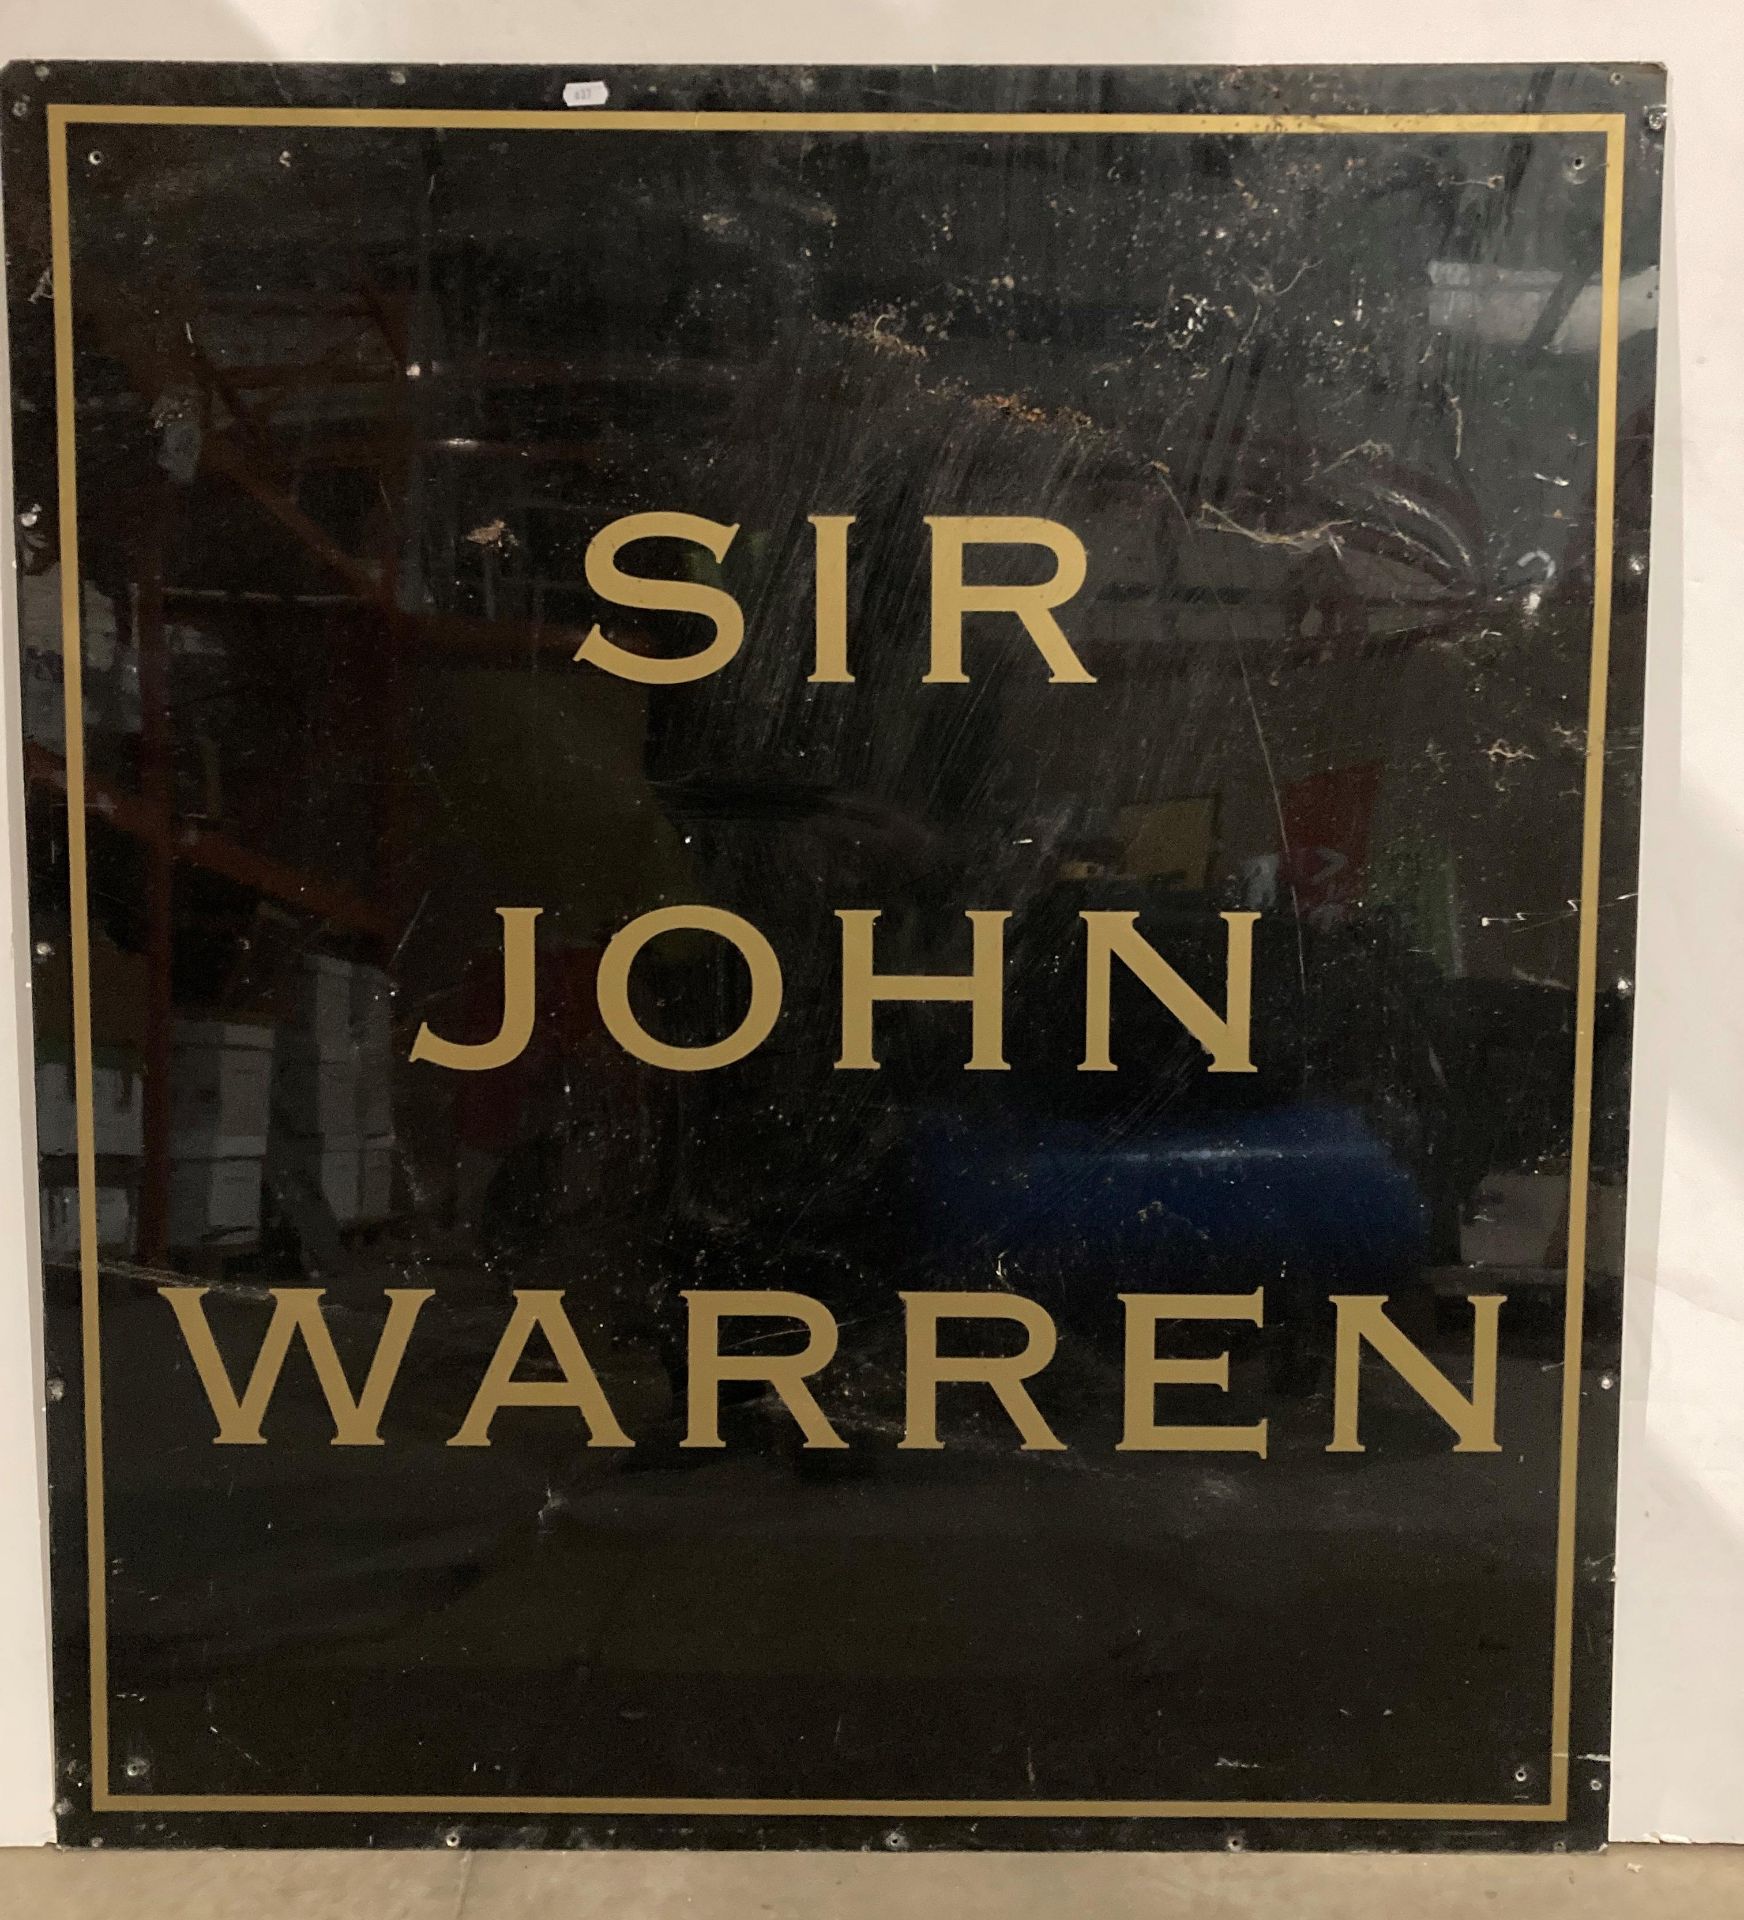 'Sir John Warren' black and gold aluminium coated sign - 112 x 100cm (saleroom location: MA1 wall) - Image 2 of 2